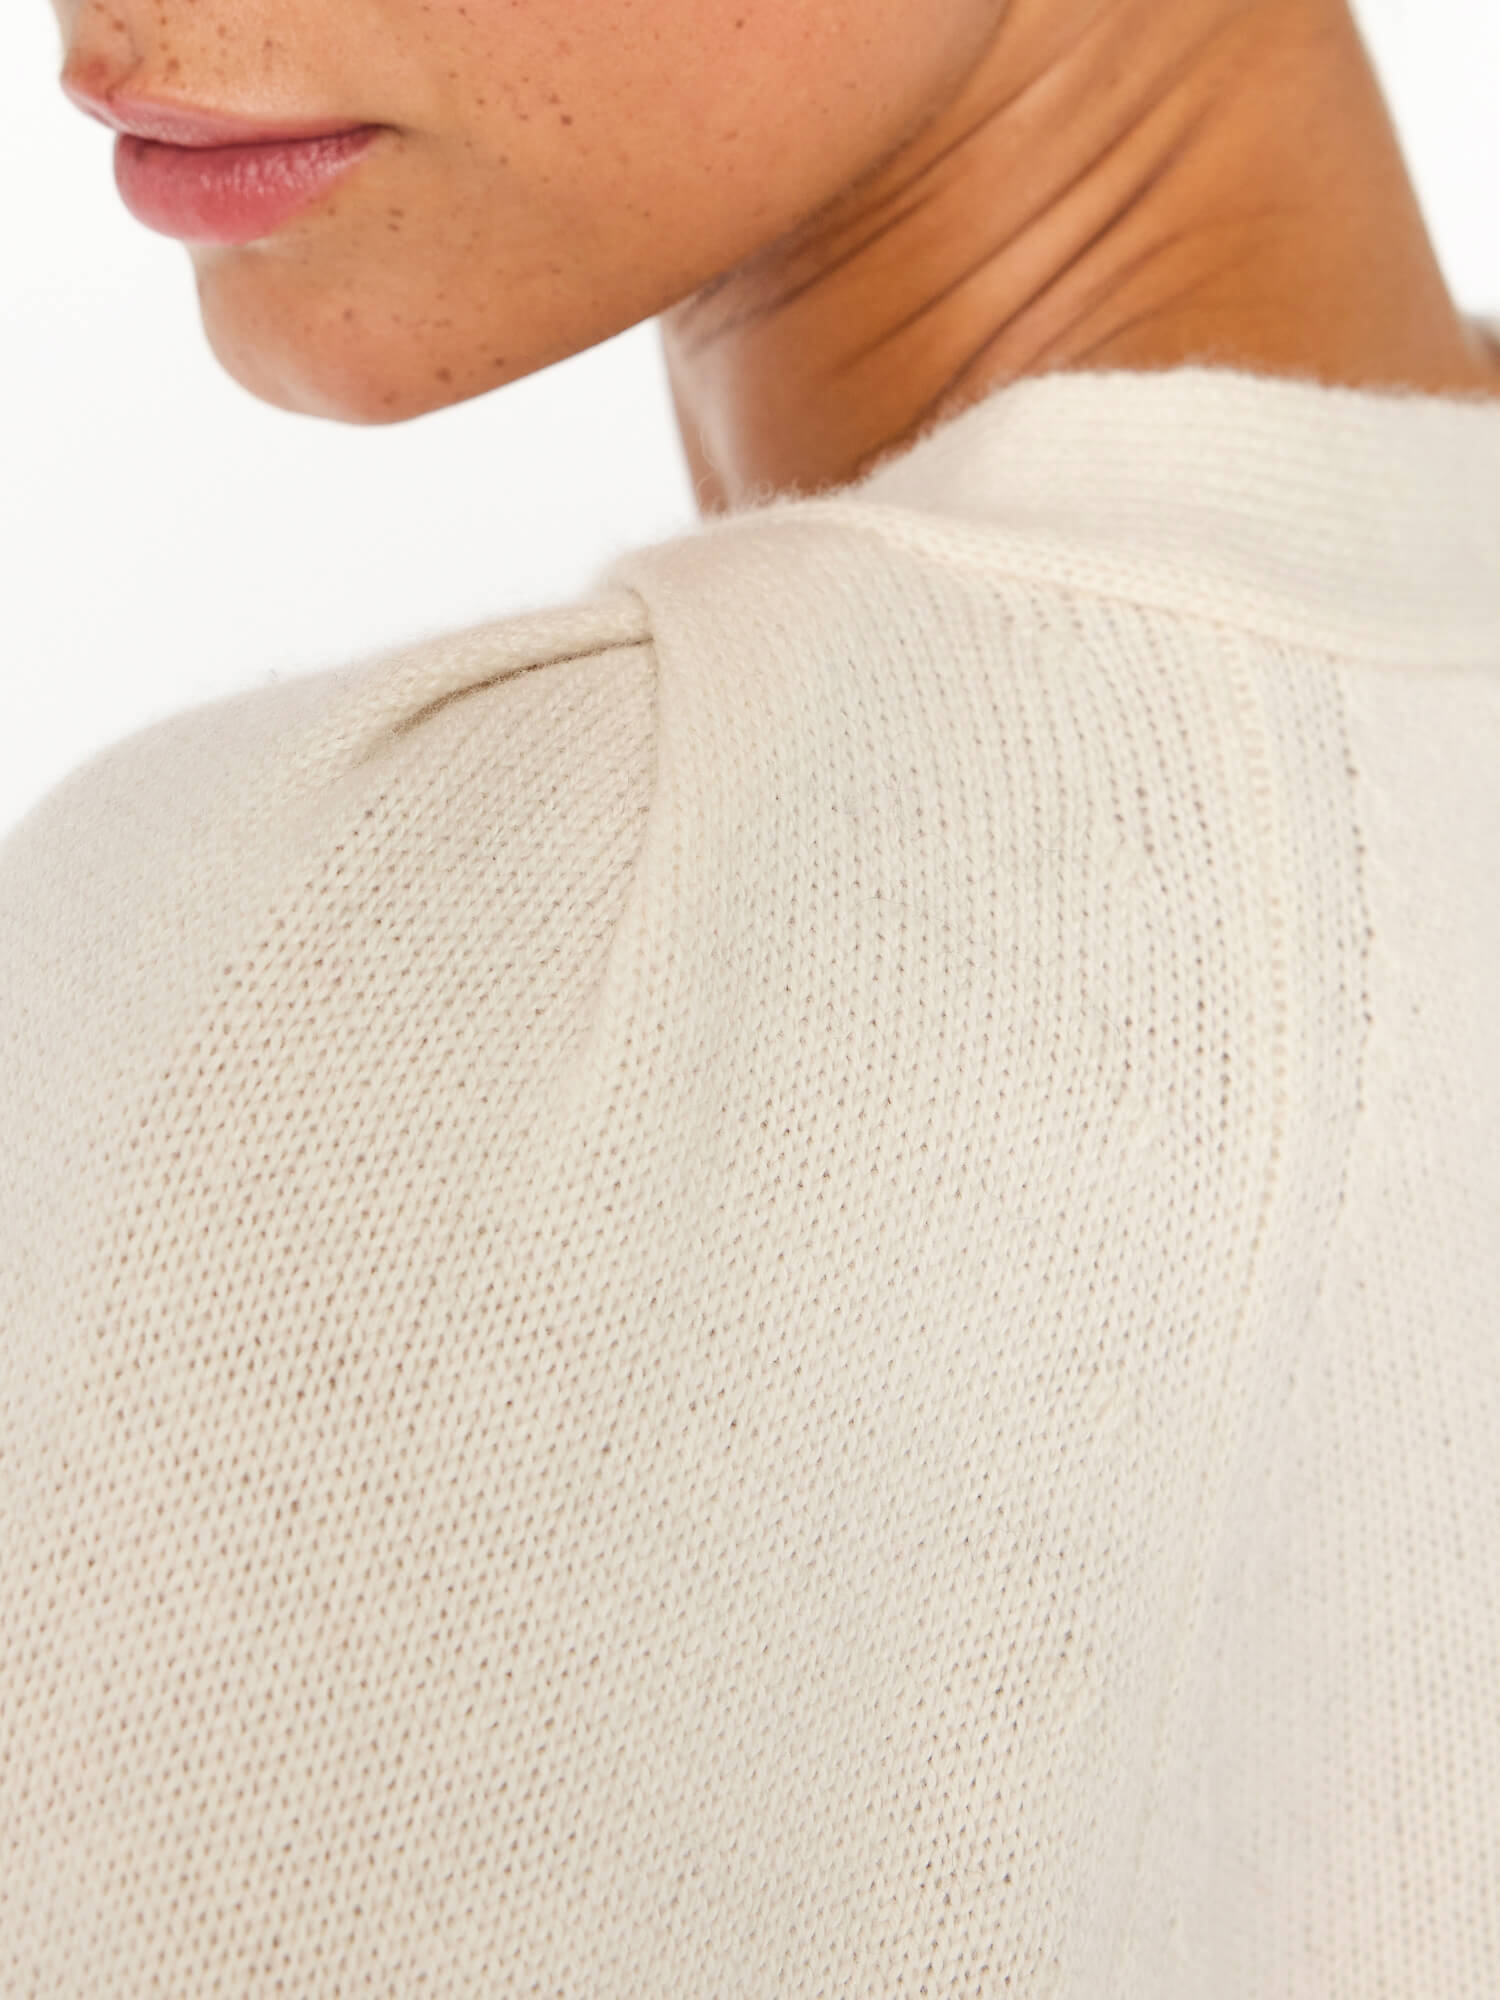 Ida white layered lace v-neck sweater close up